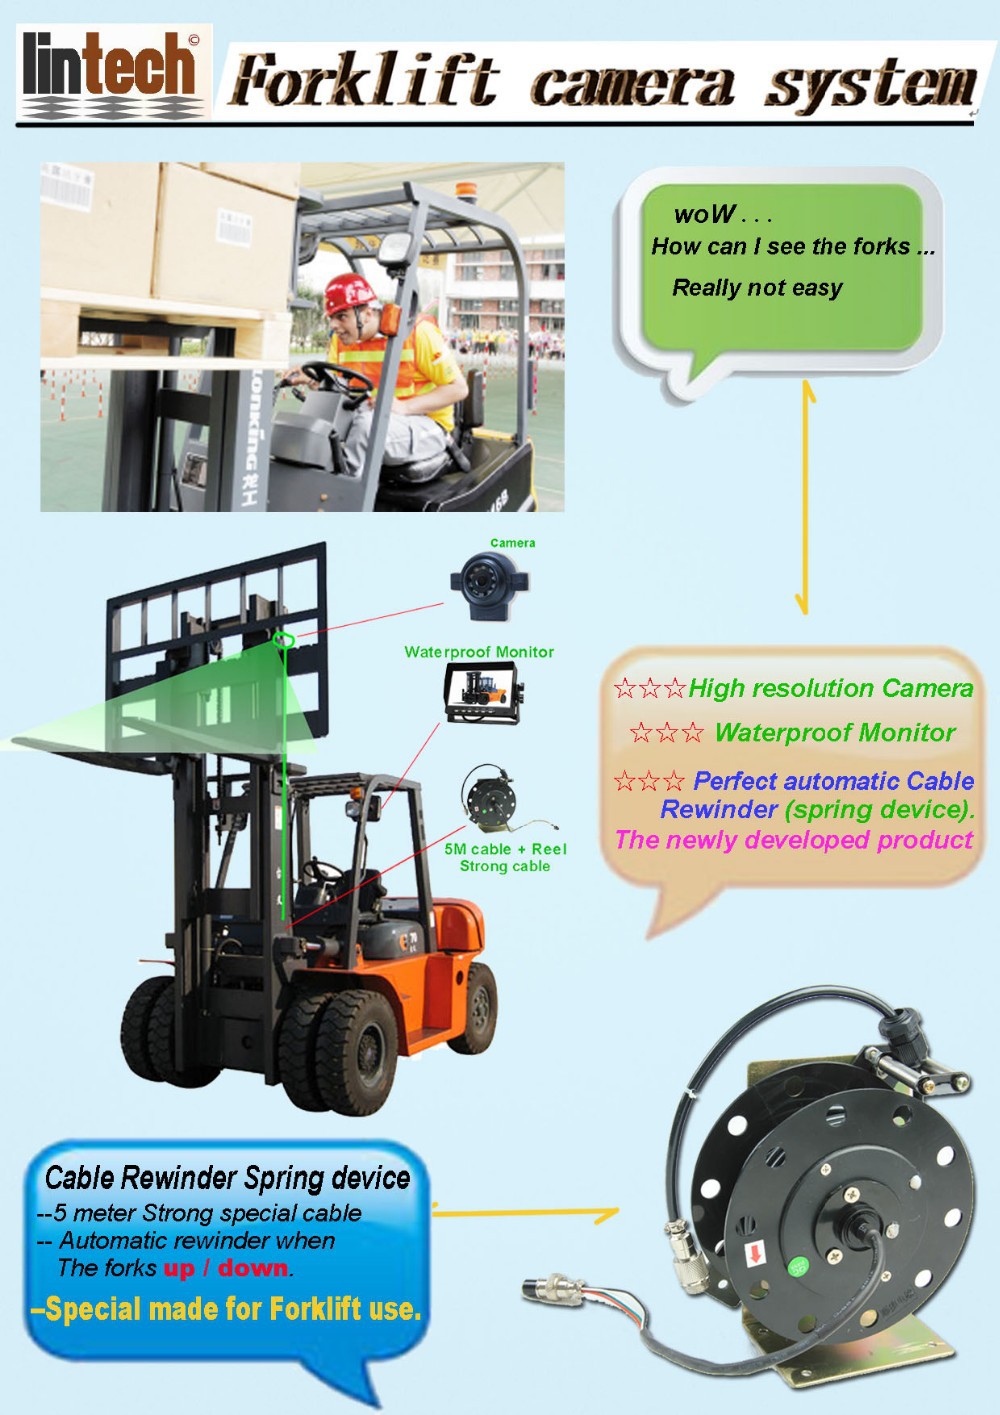 Cable Rewinder for Forklift camera system